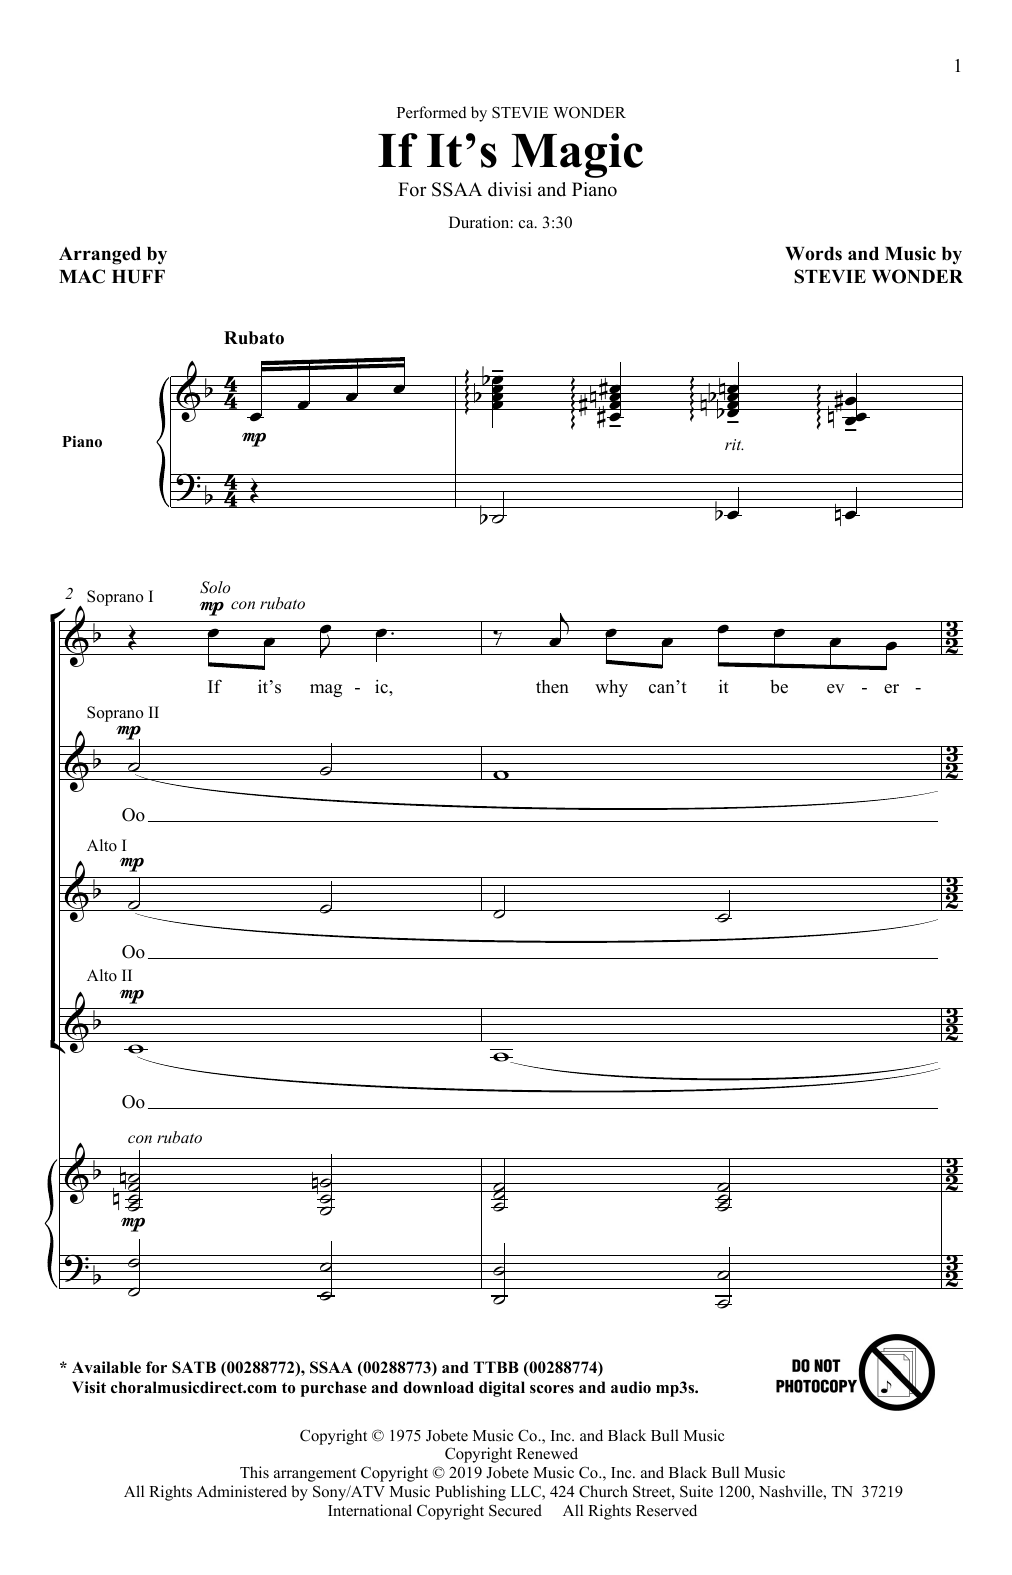 Stevie Wonder If It's Magic (arr. Mac Huff) sheet music notes and chords arranged for SATB Choir